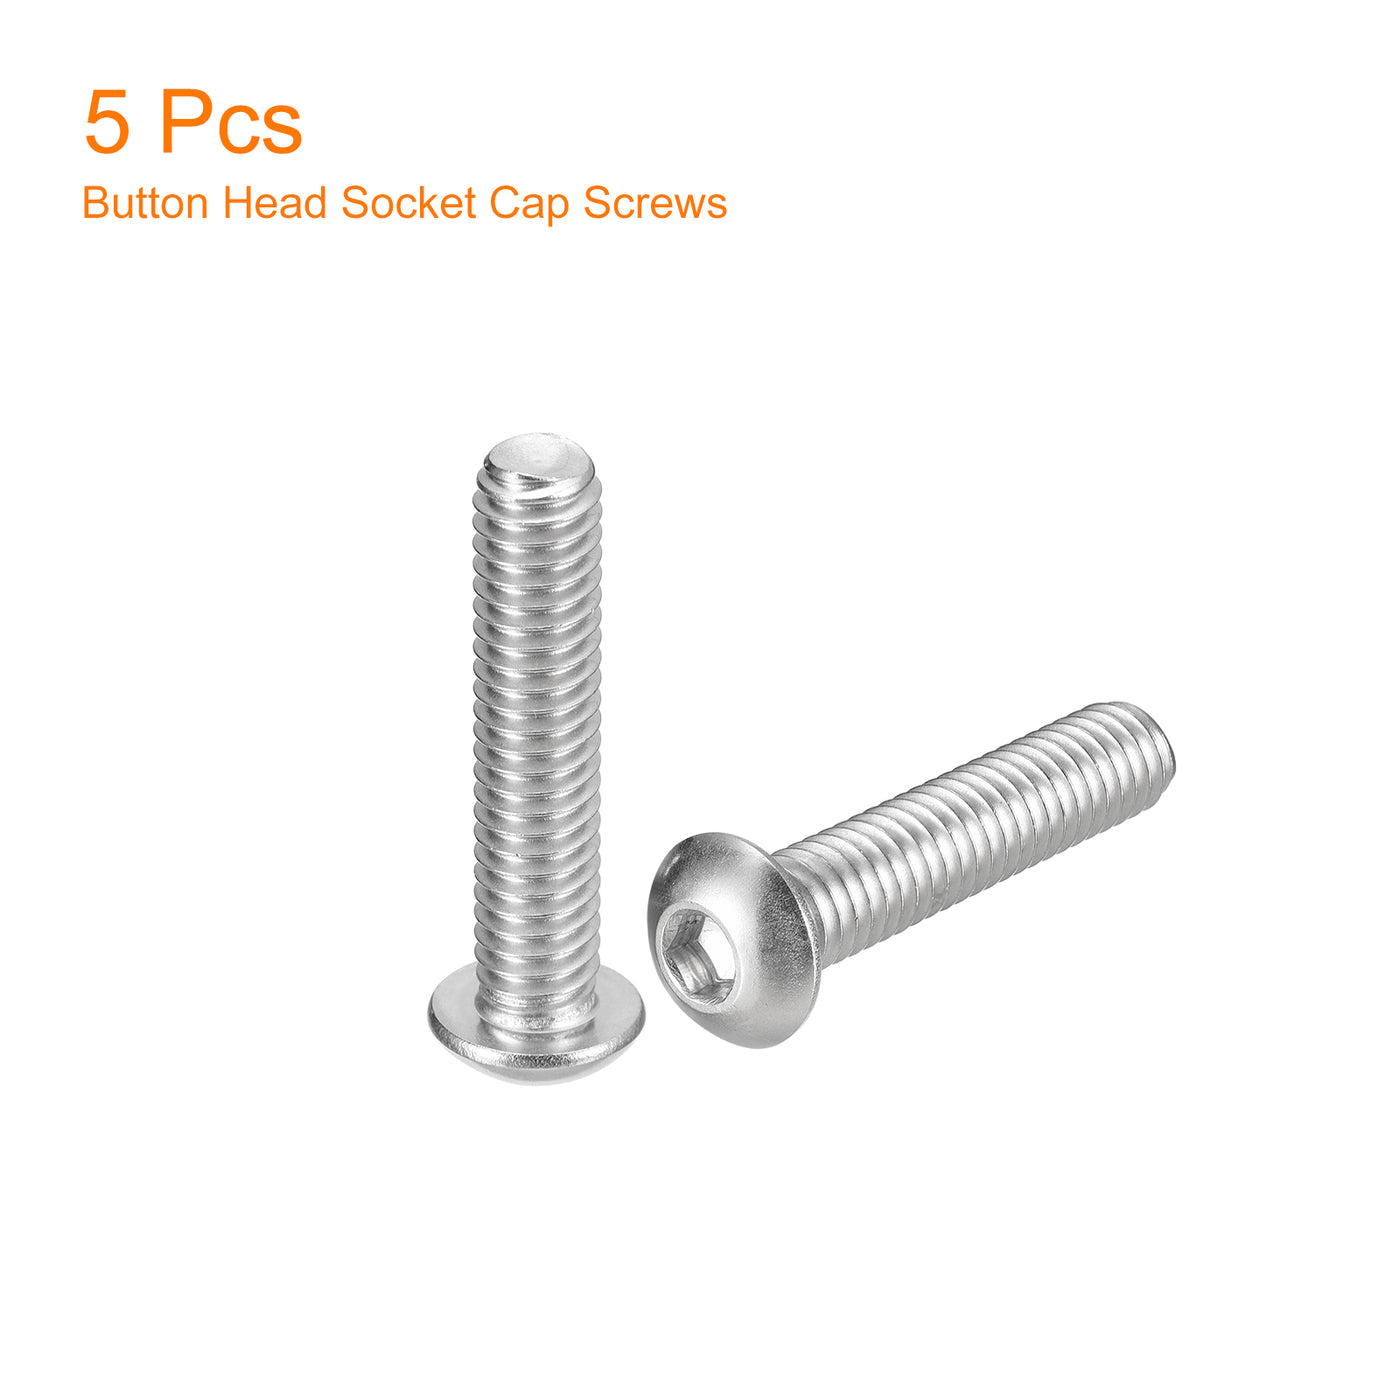 uxcell Uxcell 5/16-18x1-1/2" Button Head Socket Cap Screws, 5pcs 304 Stainless Steel Screws